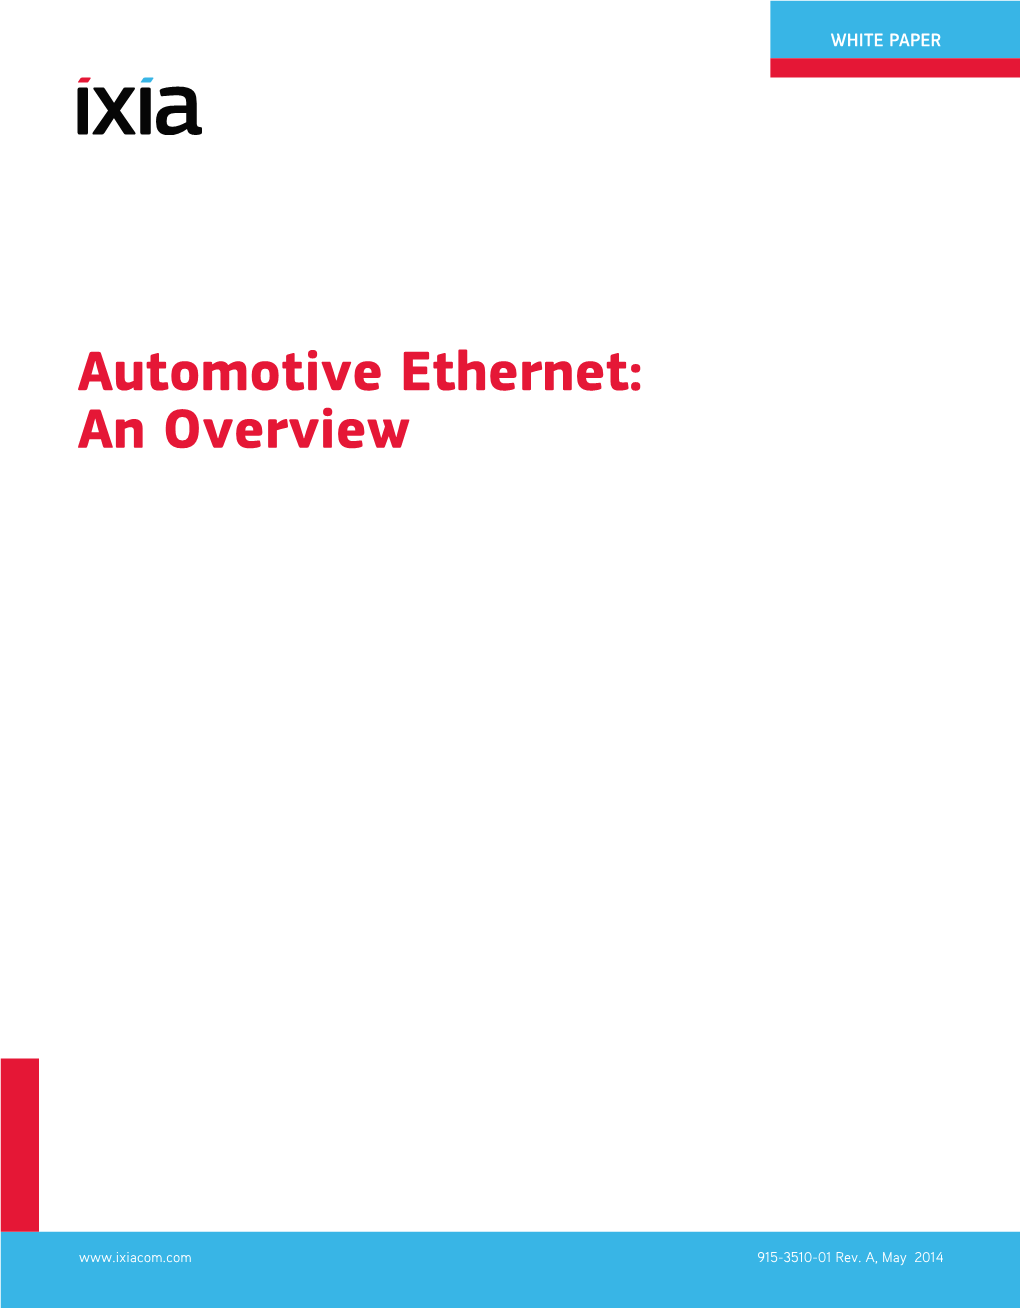 Automotive Ethernet: an Overview